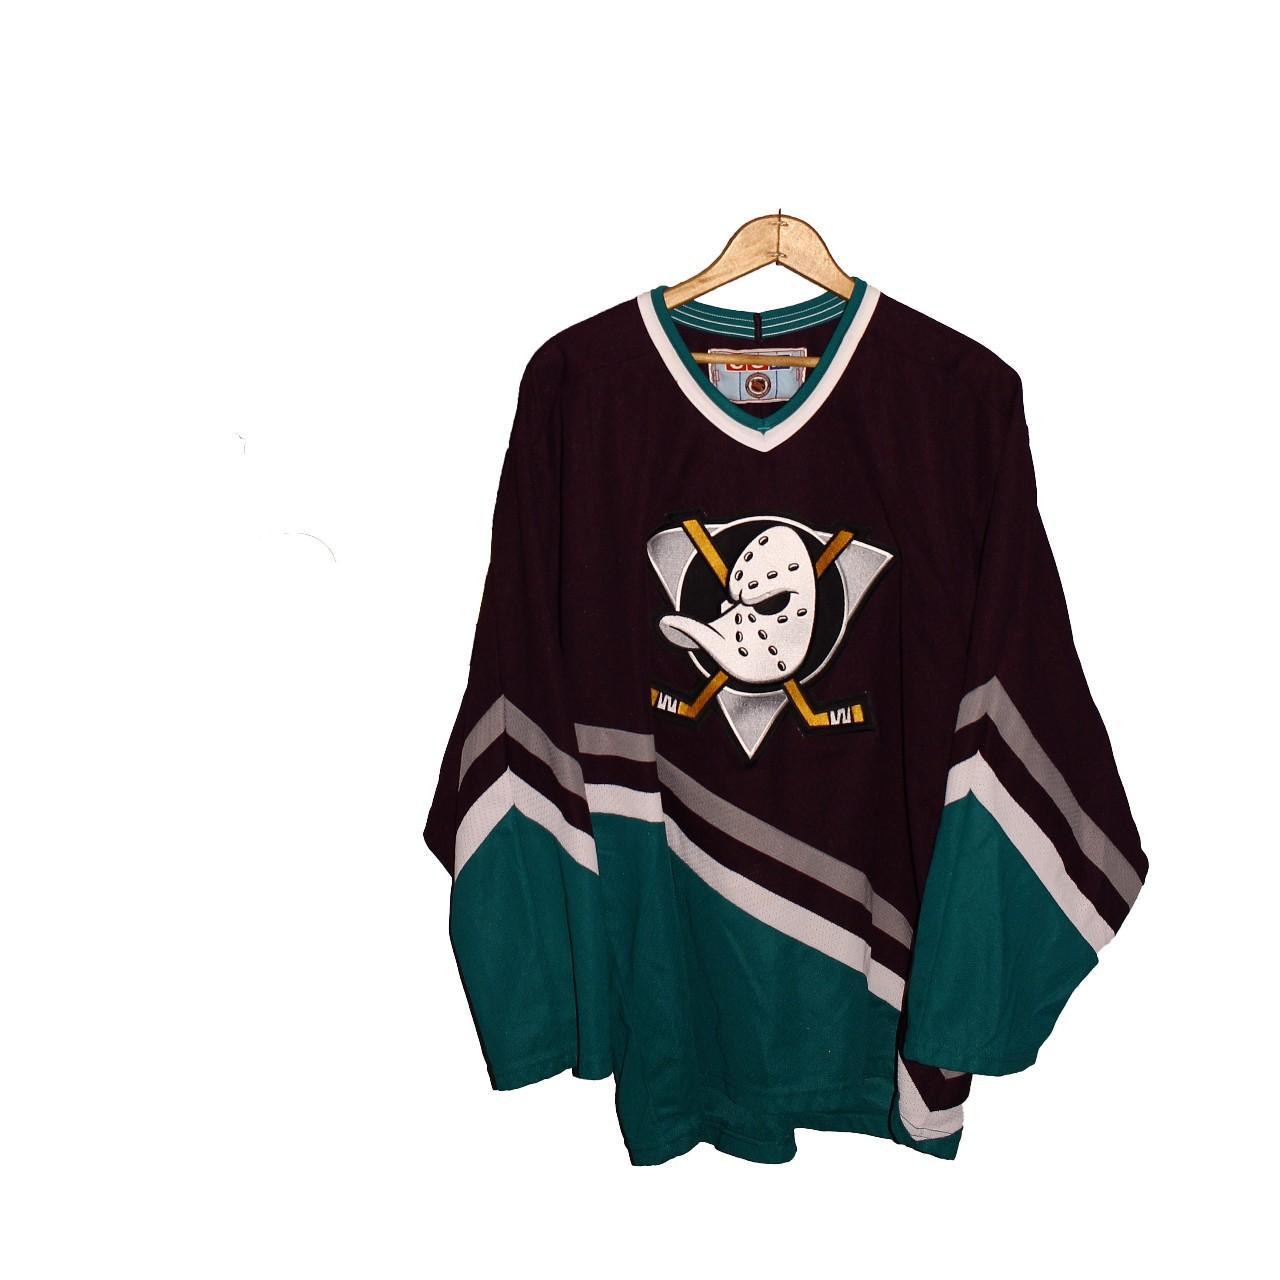 STARTER, Shirts, Vintage Mighty Ducks Starter Jersey